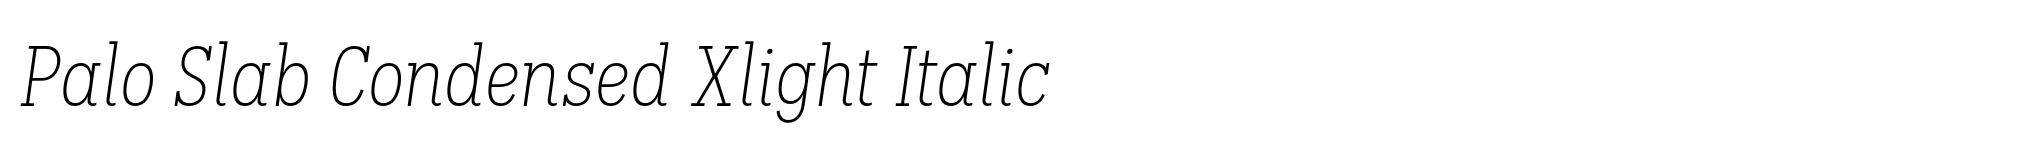 Palo Slab Condensed Xlight Italic image